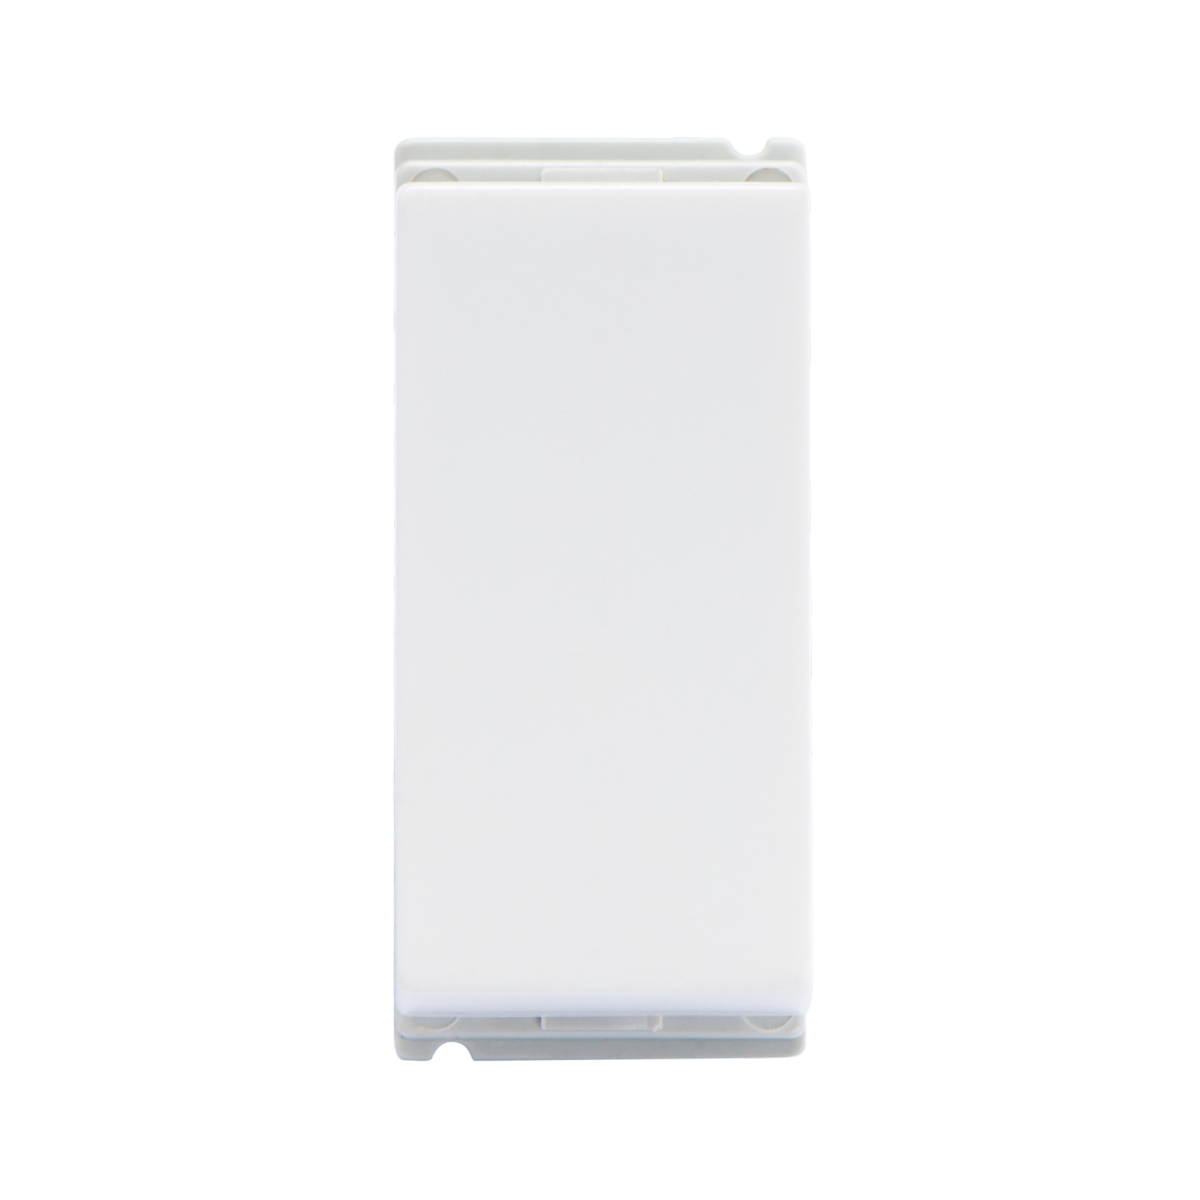 Philips Switch 1M-1W 10AX Smart-White